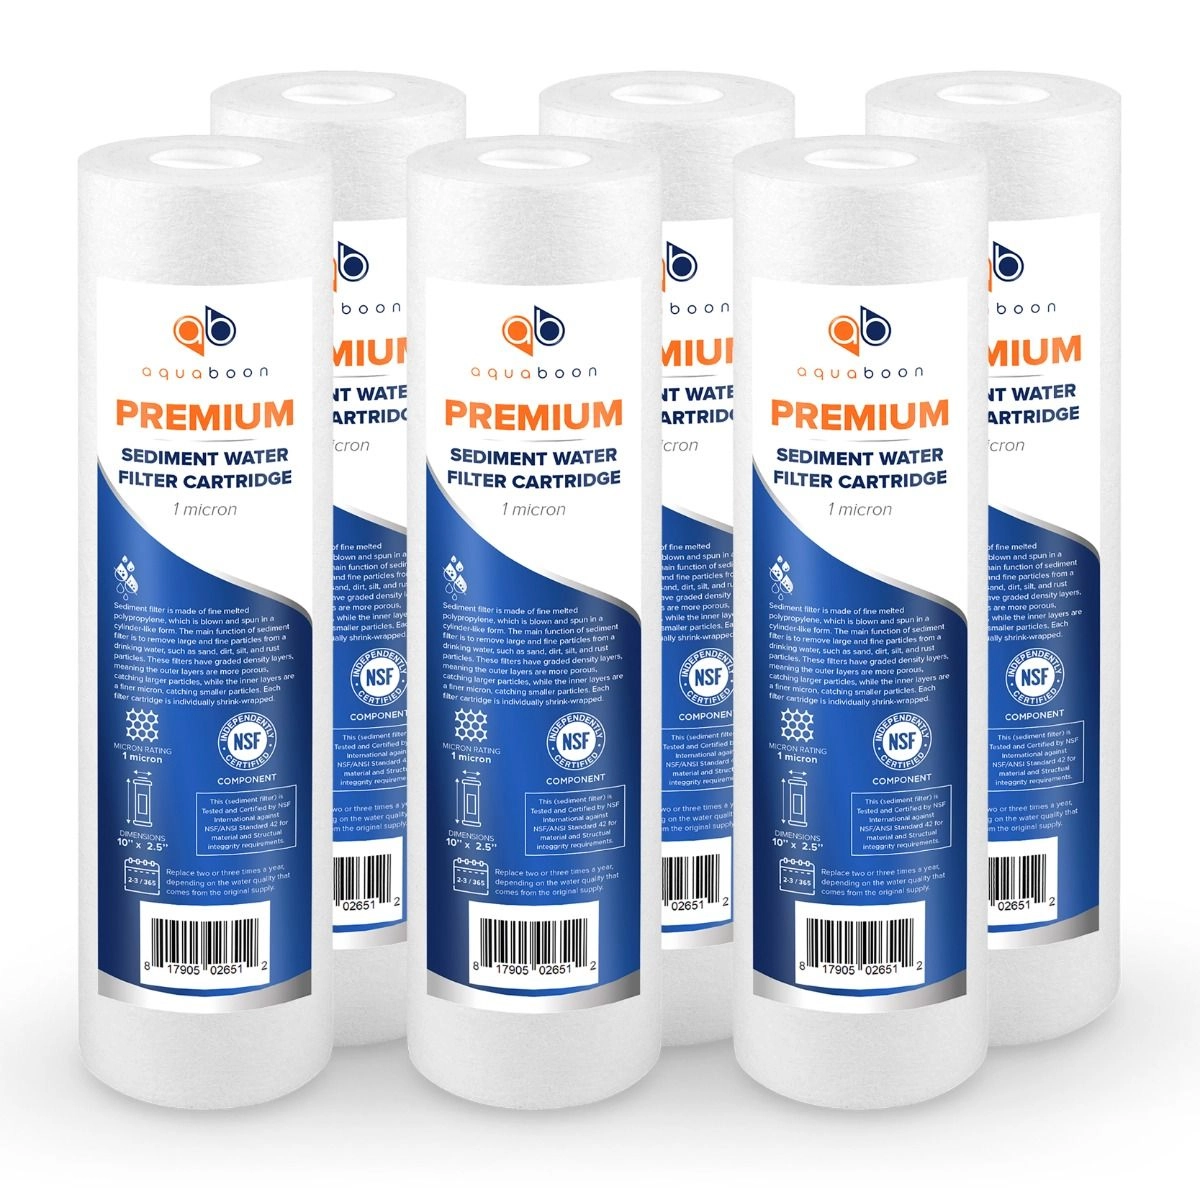 6 Pack Of Aquaboon Premium NSF CERTIFIED 1 Micron 10 x 2.5 Inch Sediment Water Filter Cartridge